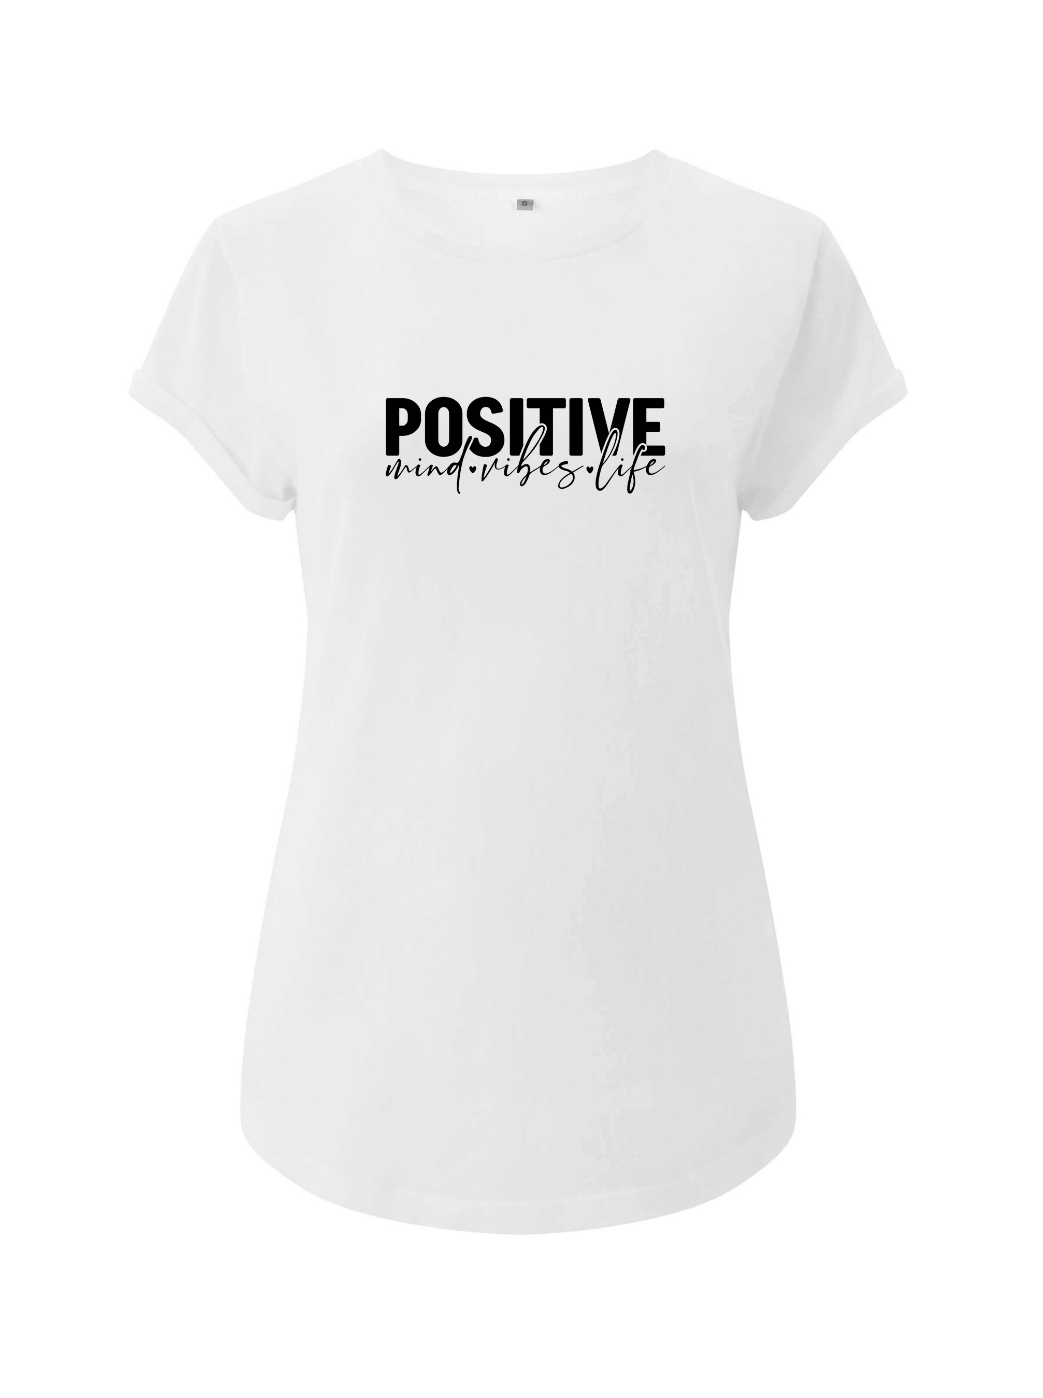 Positiv Mind Vibes Life Damen T-Shirt rolled arms weiß